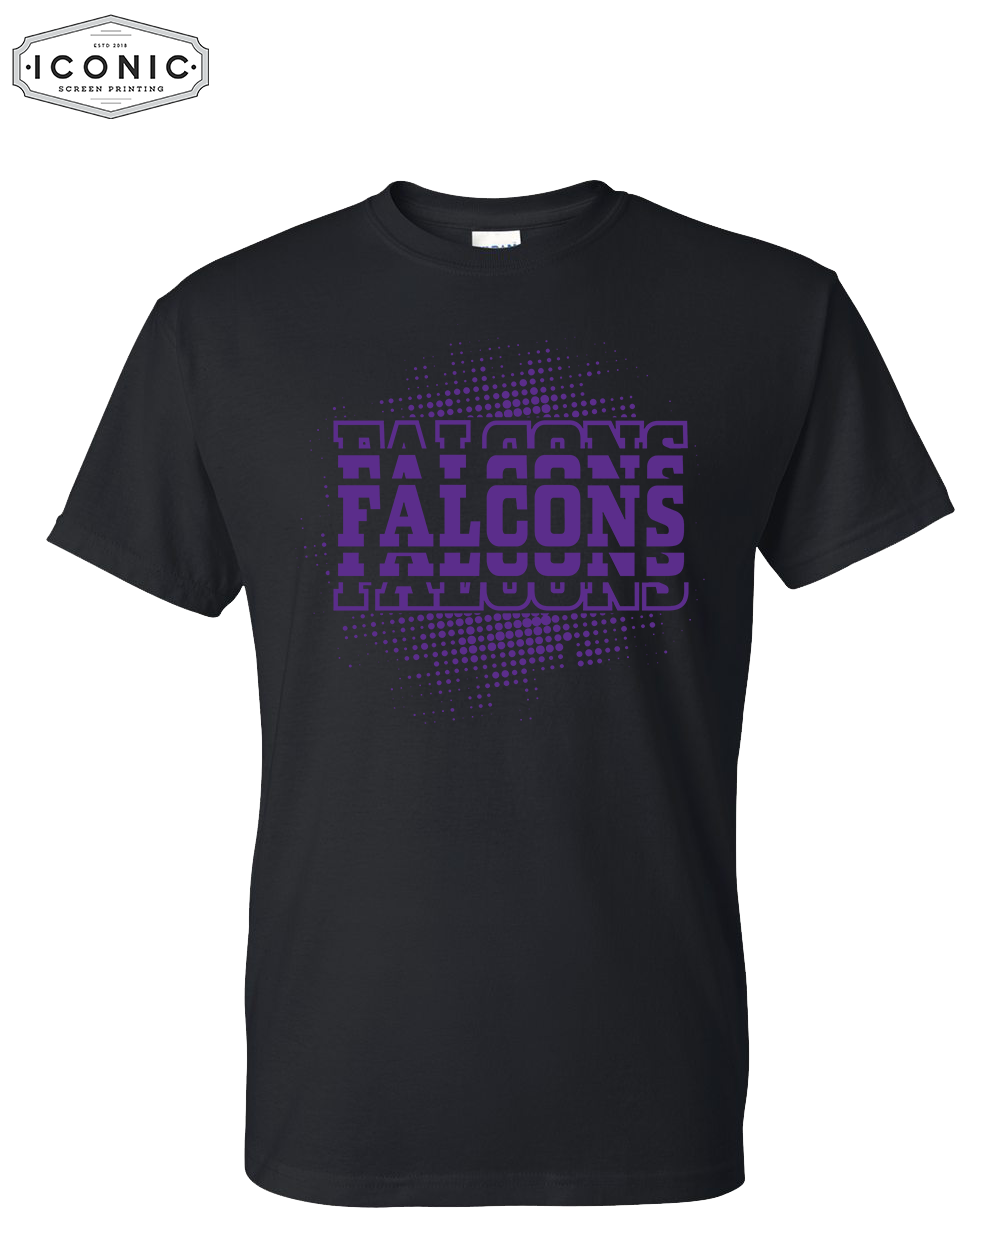 FALCONS - Dryblend T-shirt